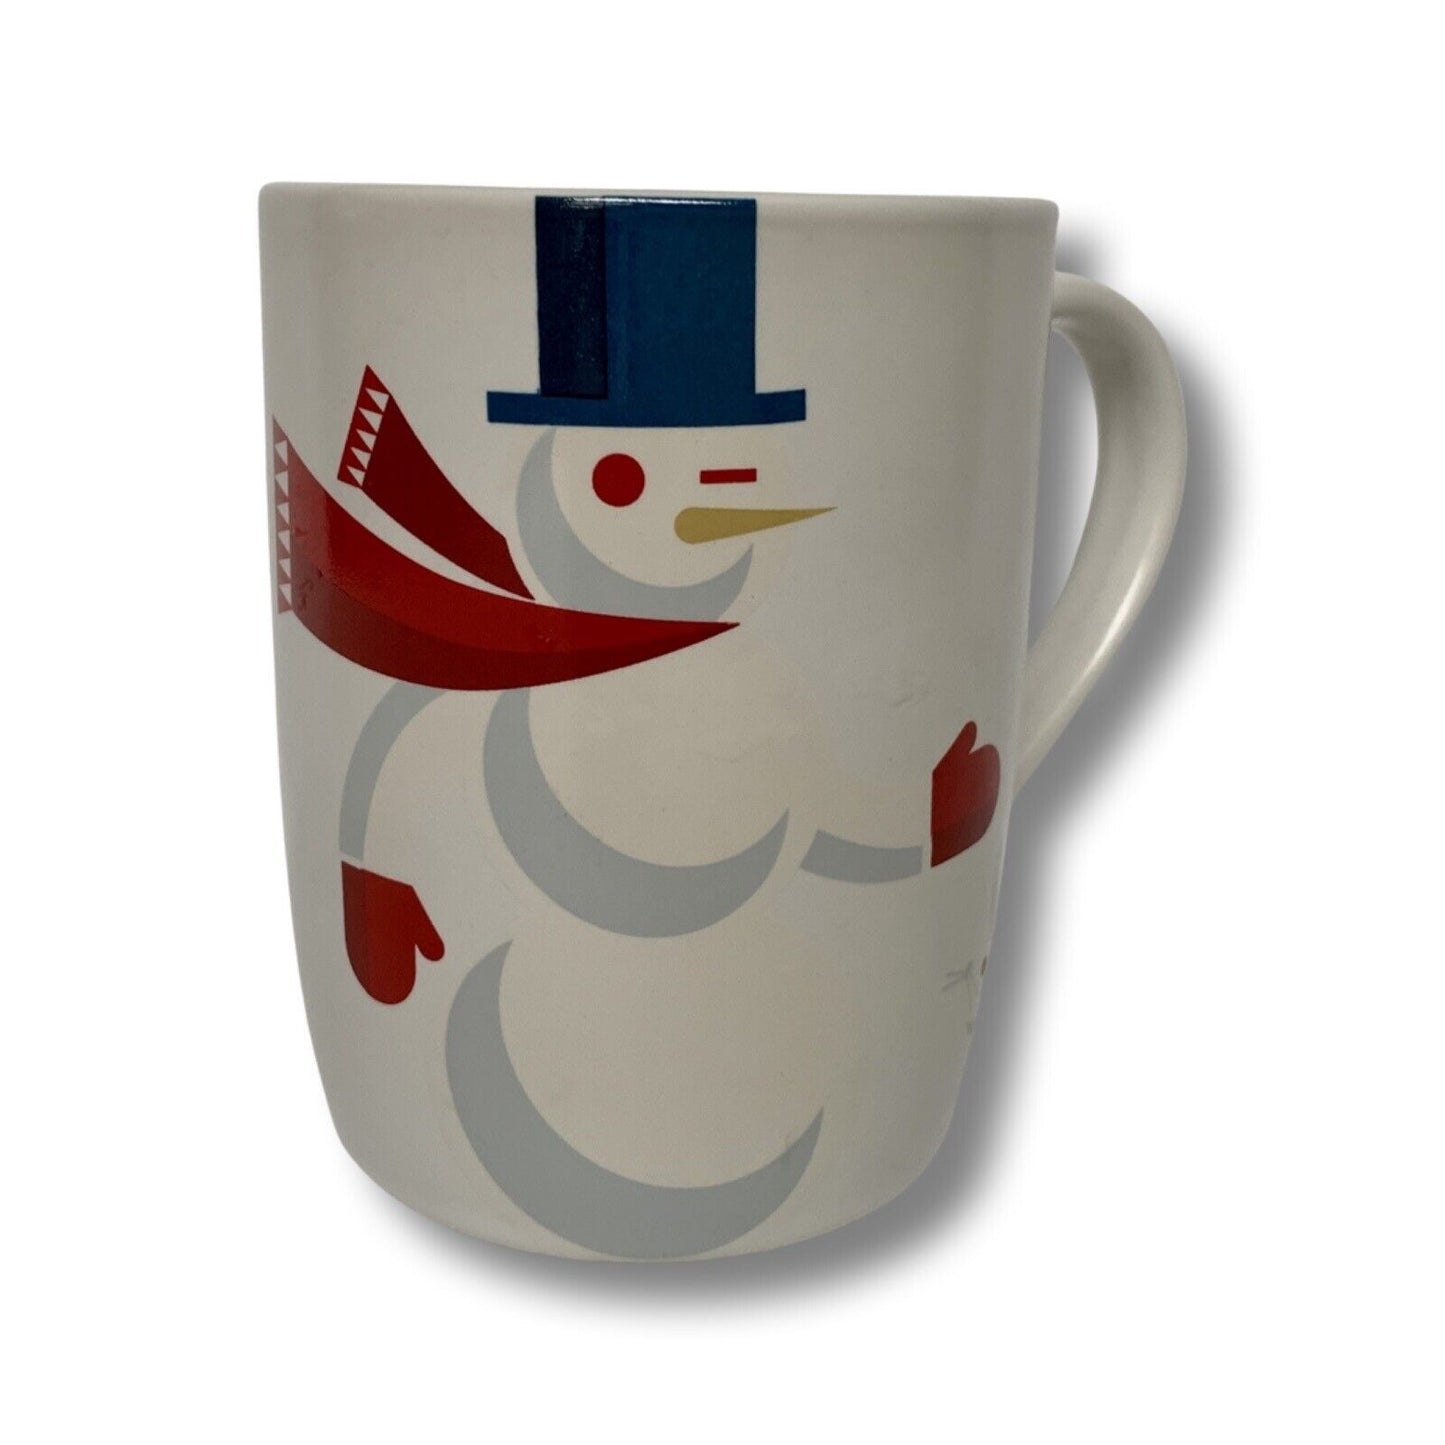 Starbucks 2012 SNOWMAN & Bunny Ceramic Coffee Mug Cup